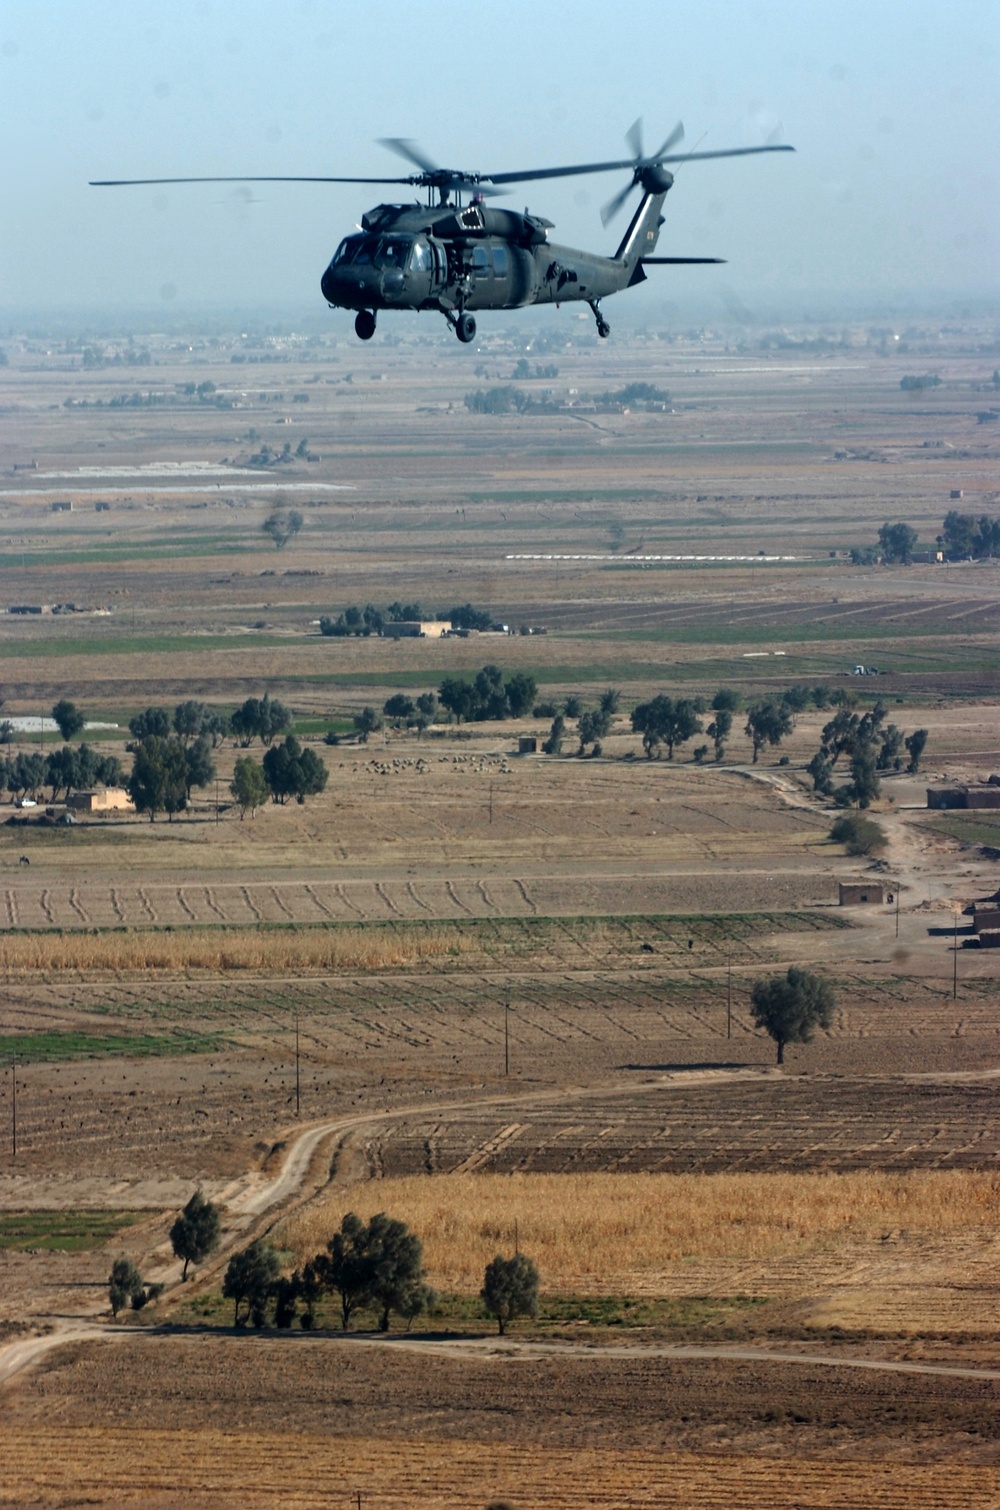 Mission Over Iraq